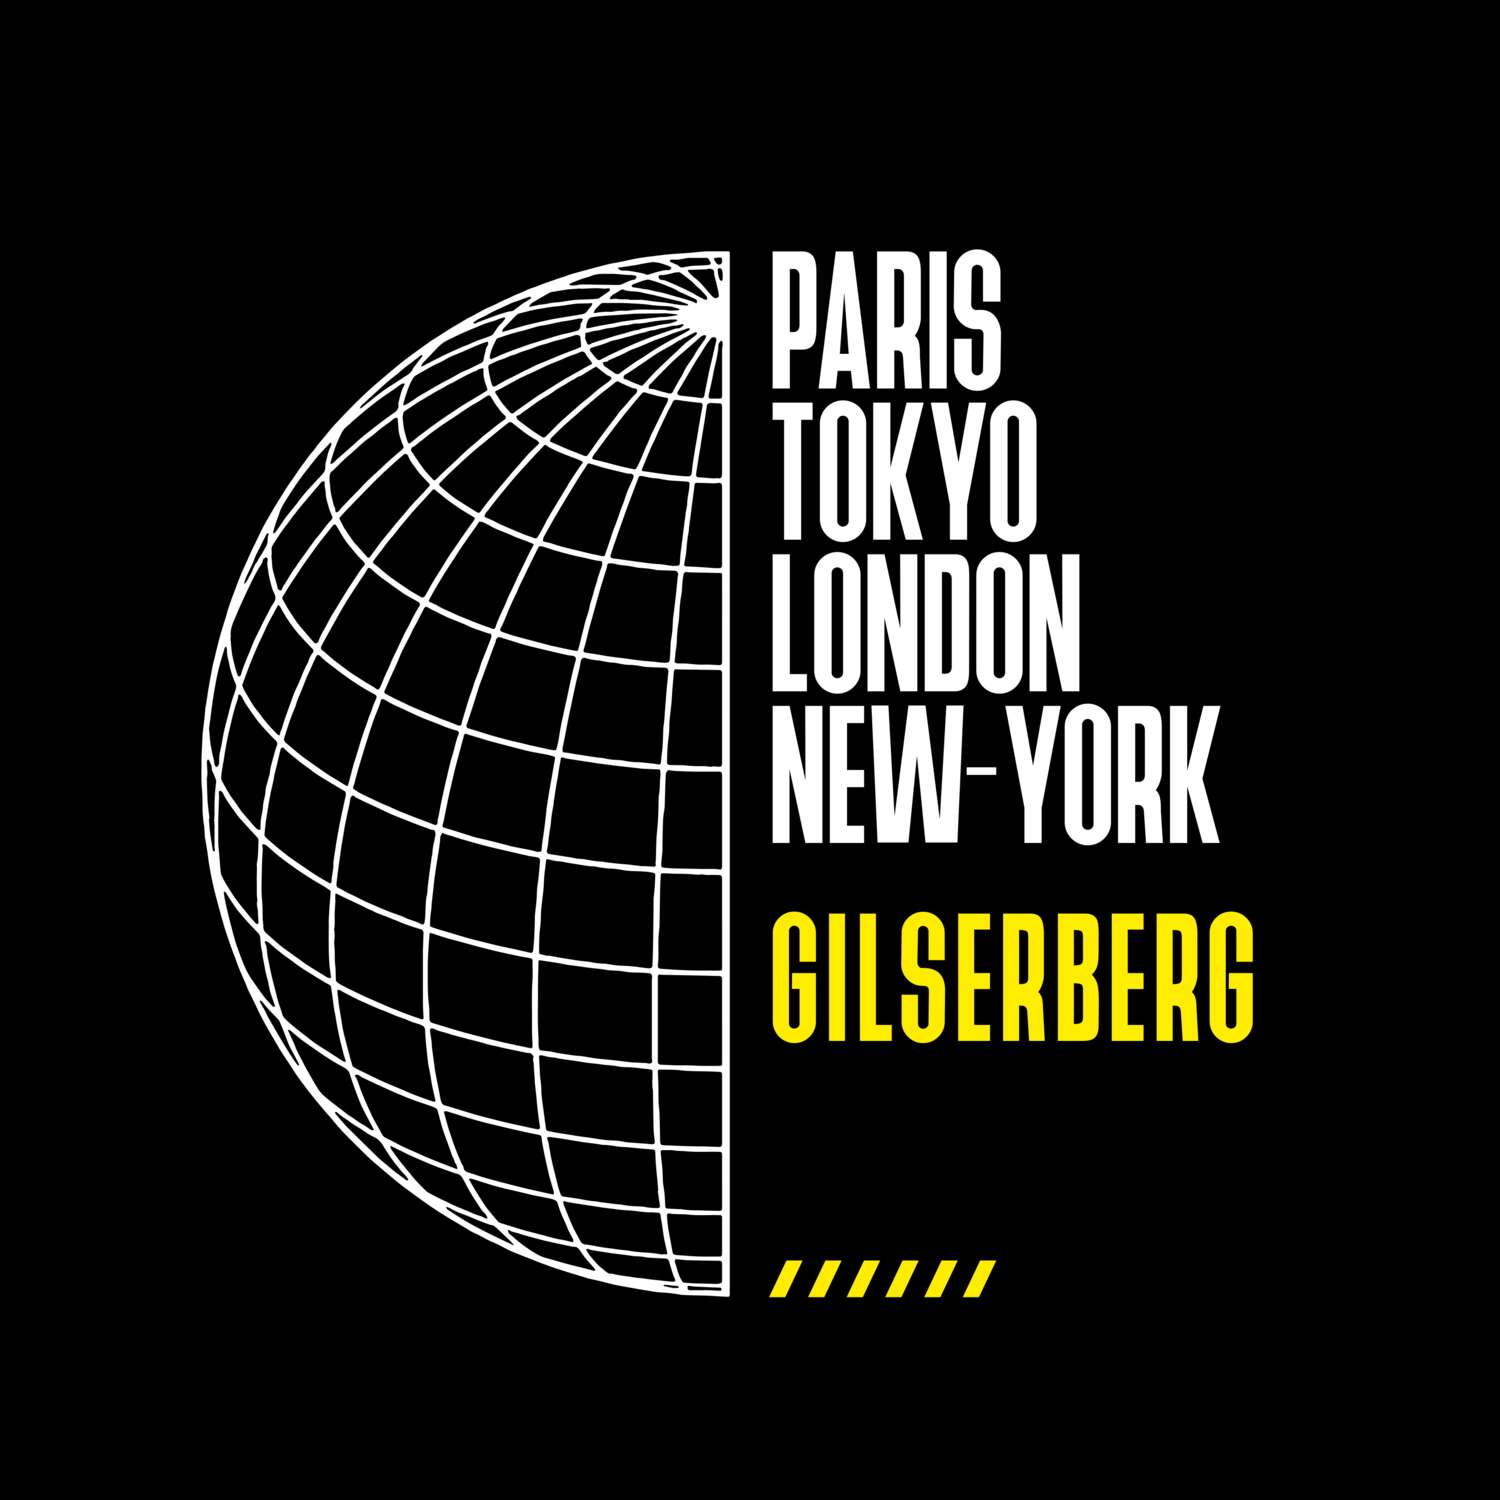 Gilserberg T-Shirt »Paris Tokyo London«